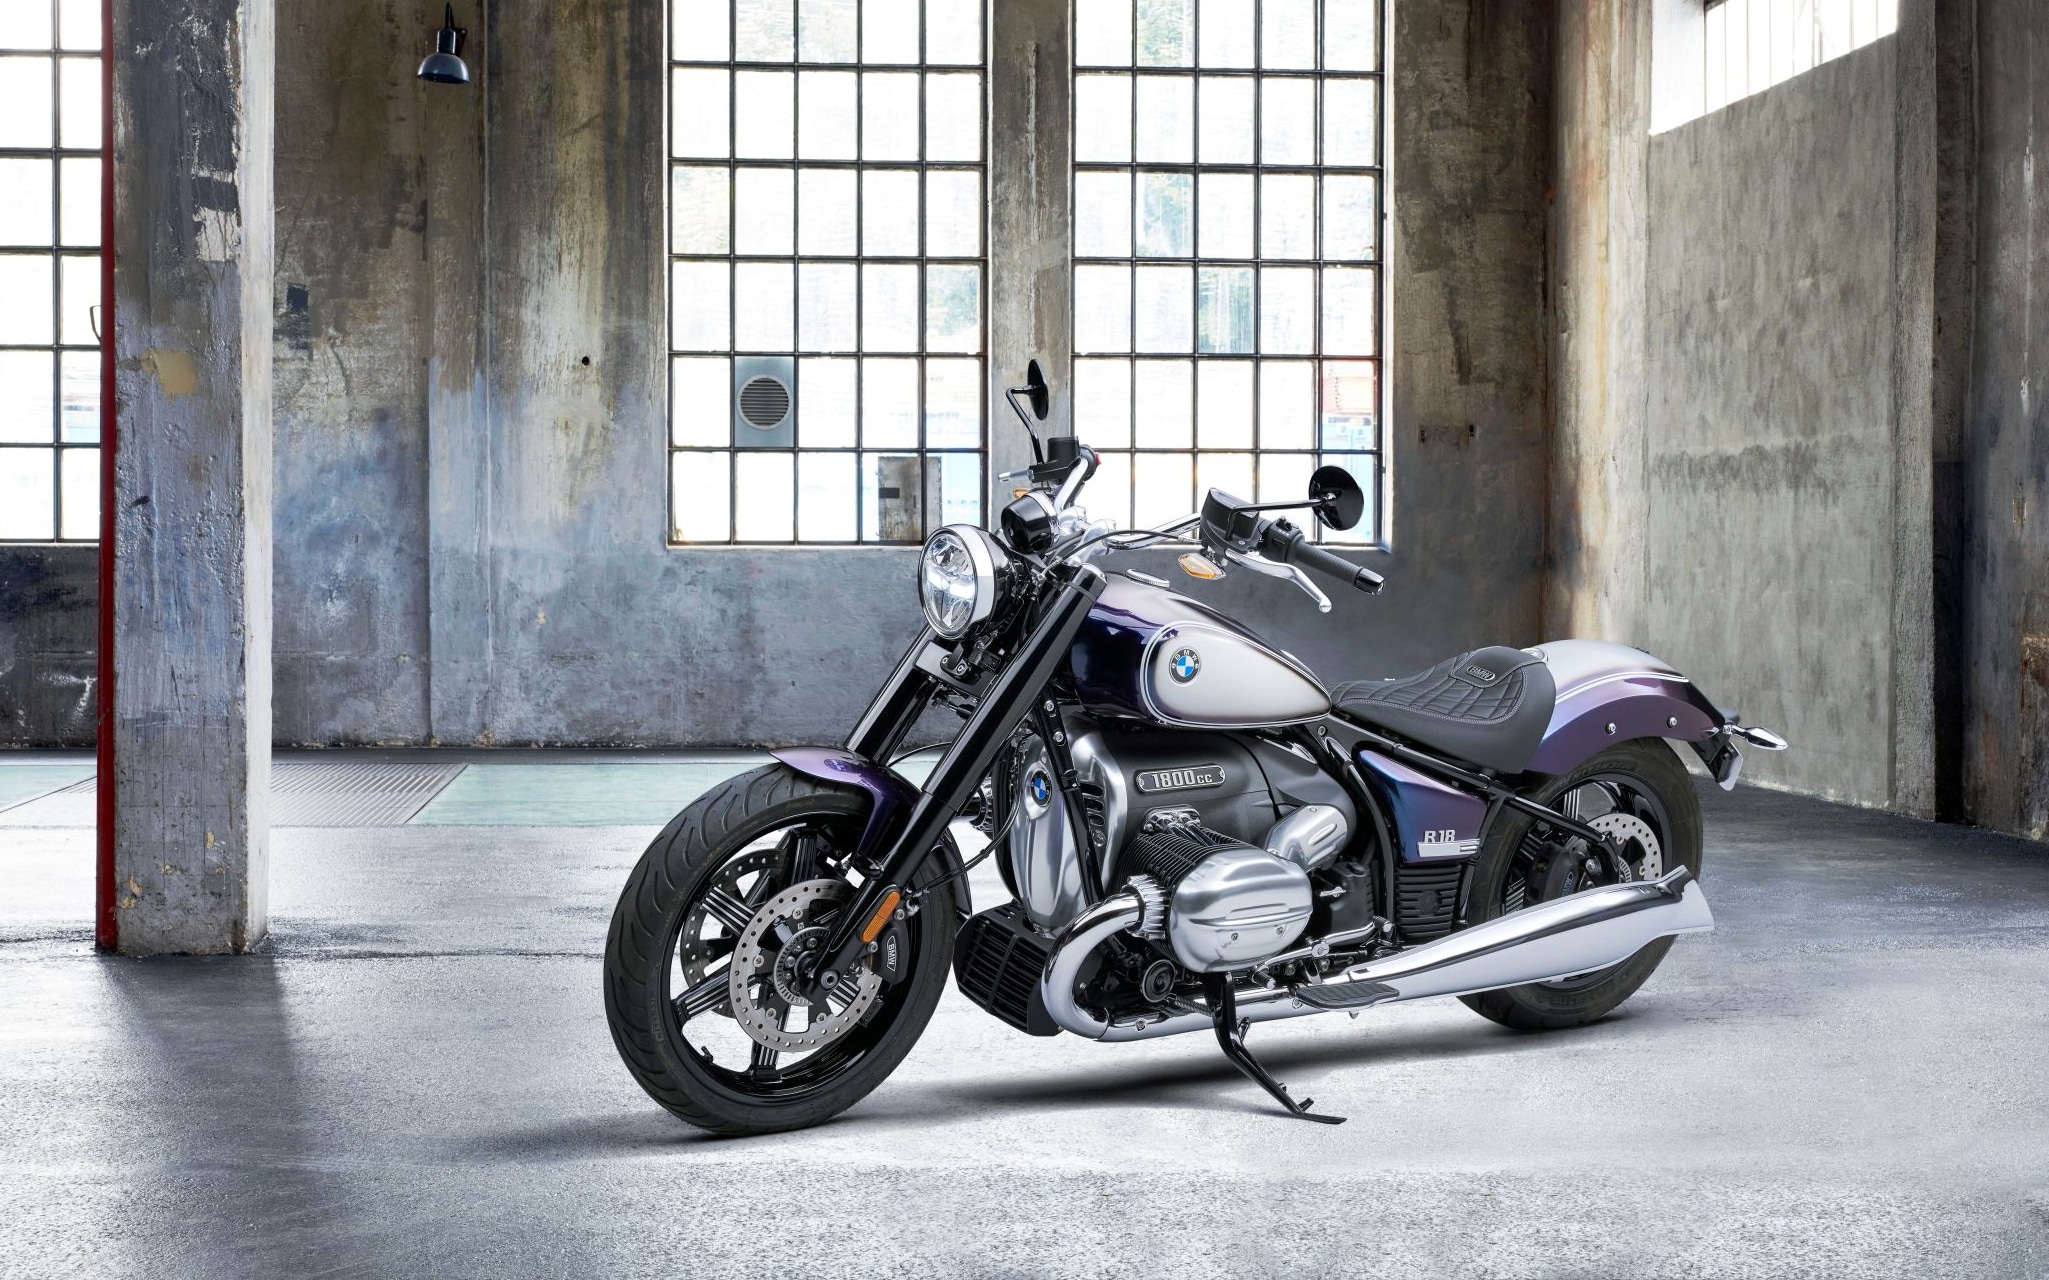 La nuova moto BMW R18 in fiera a Verona a MBE 2021